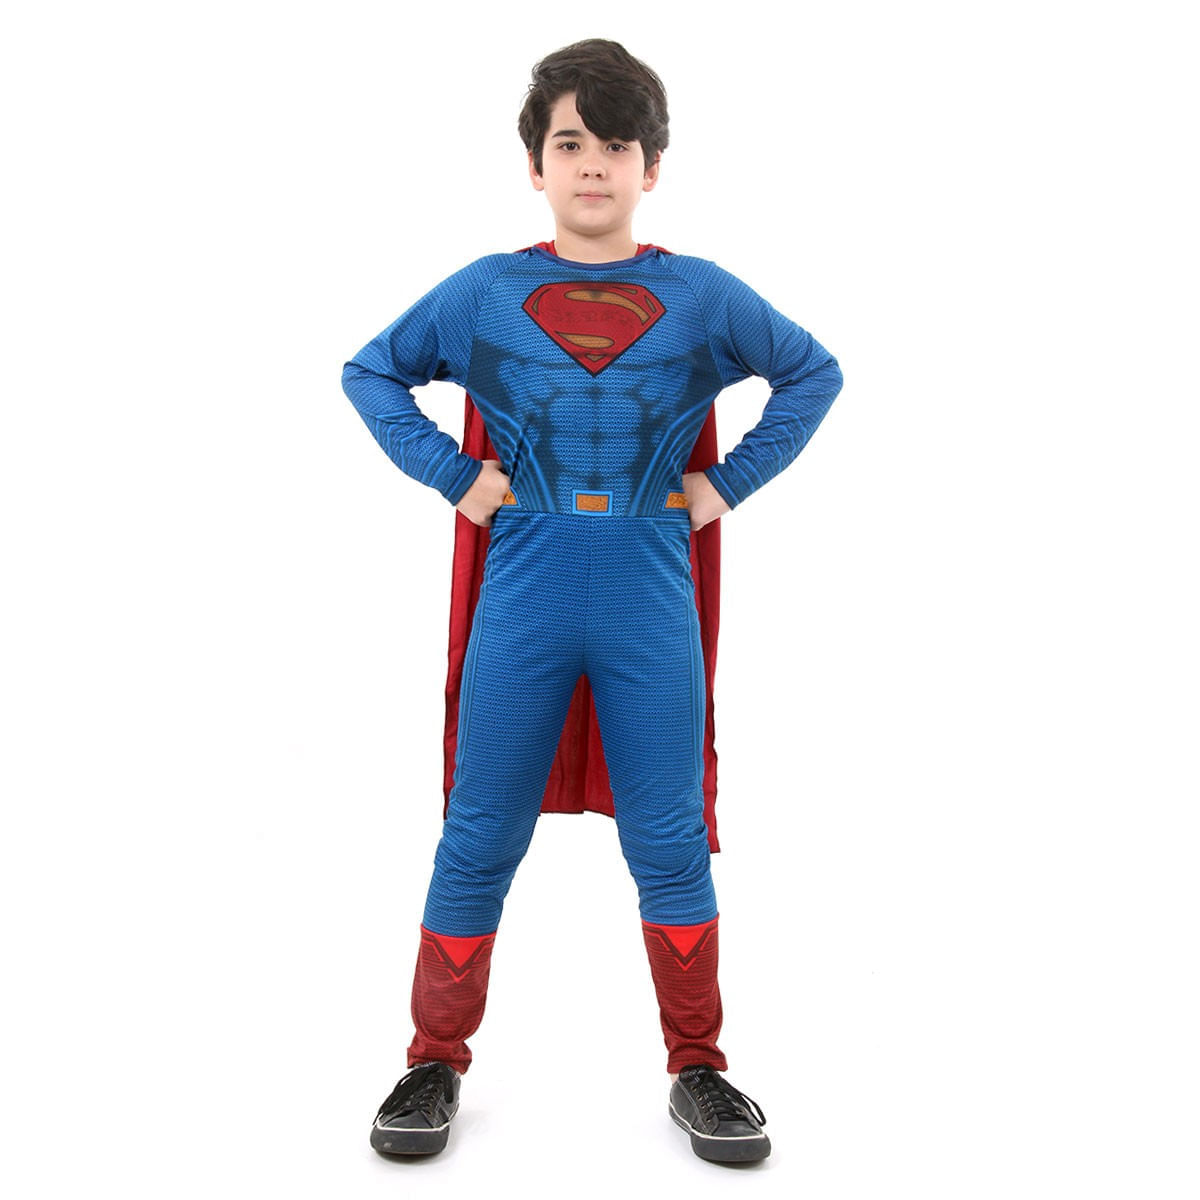 Fantasia Super Homem Infantil Standard - Liga da Justiça P / UNICA